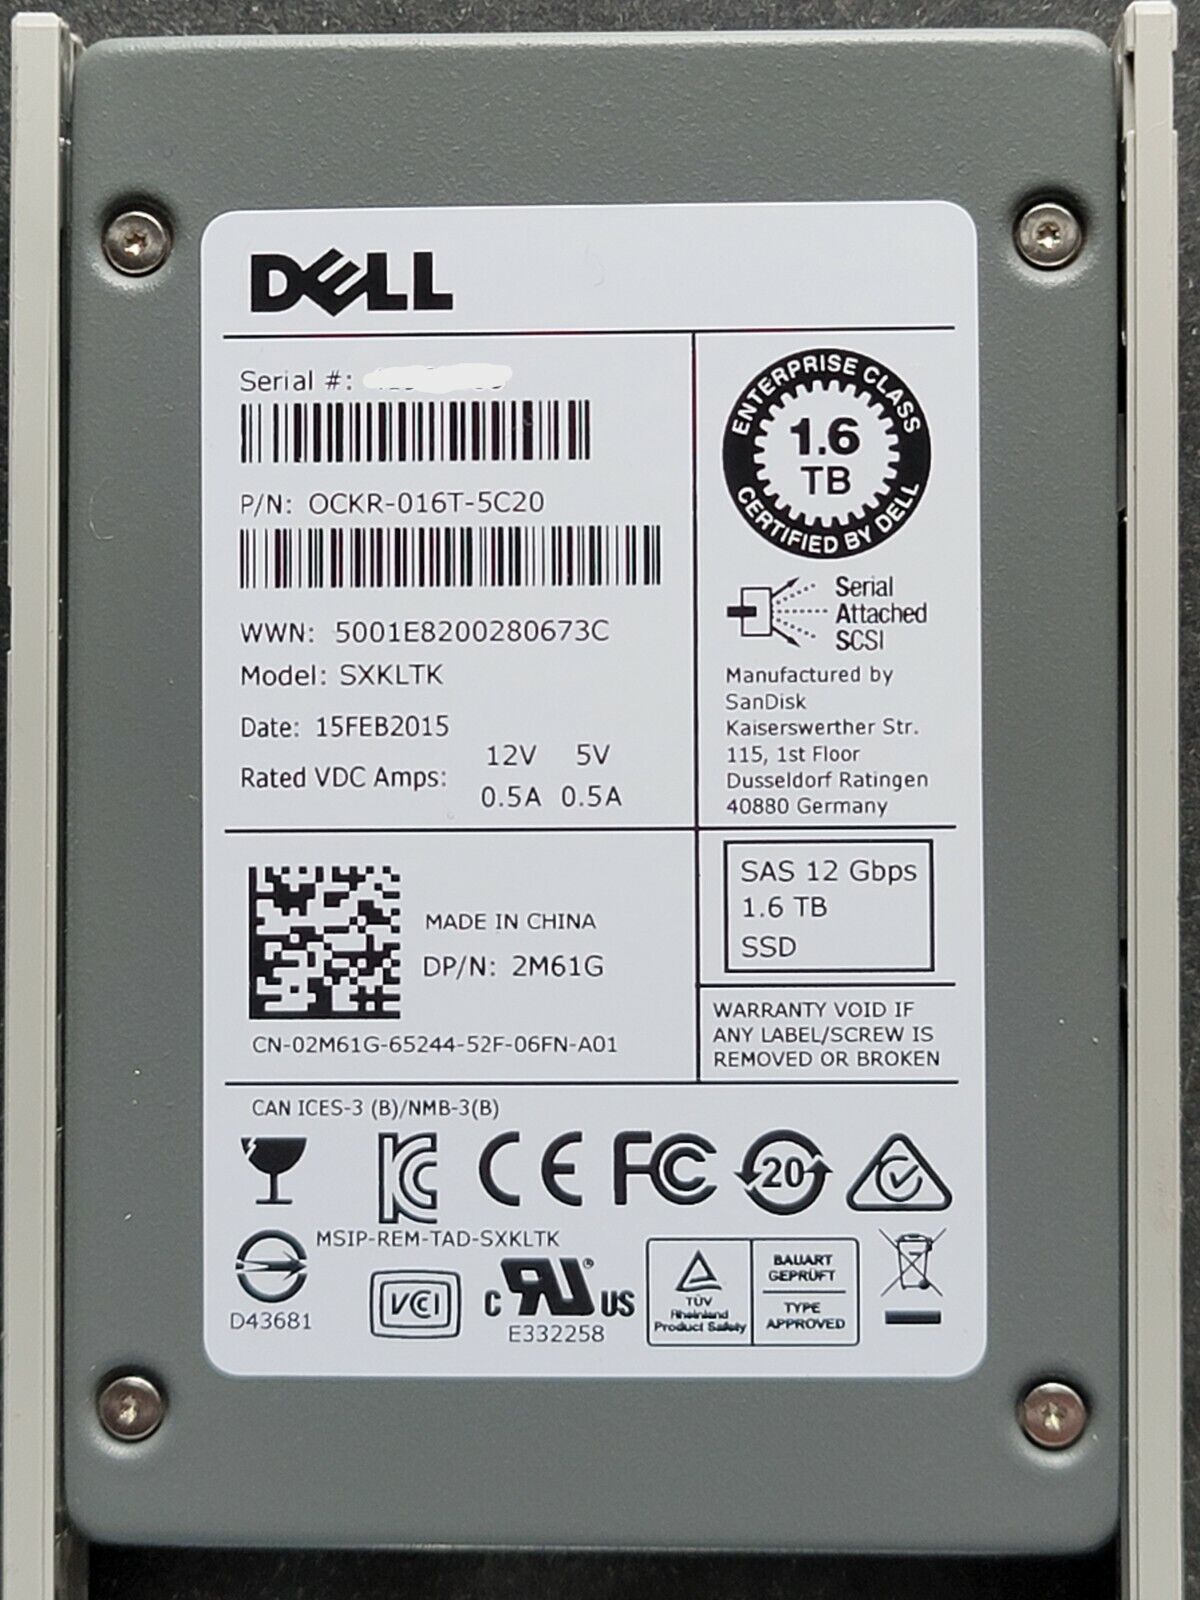 Dell 02M61G 2M61G 1.6TB SAS 12Gbps SSD SanDisk SXKLTK OCKR-016T-5C20